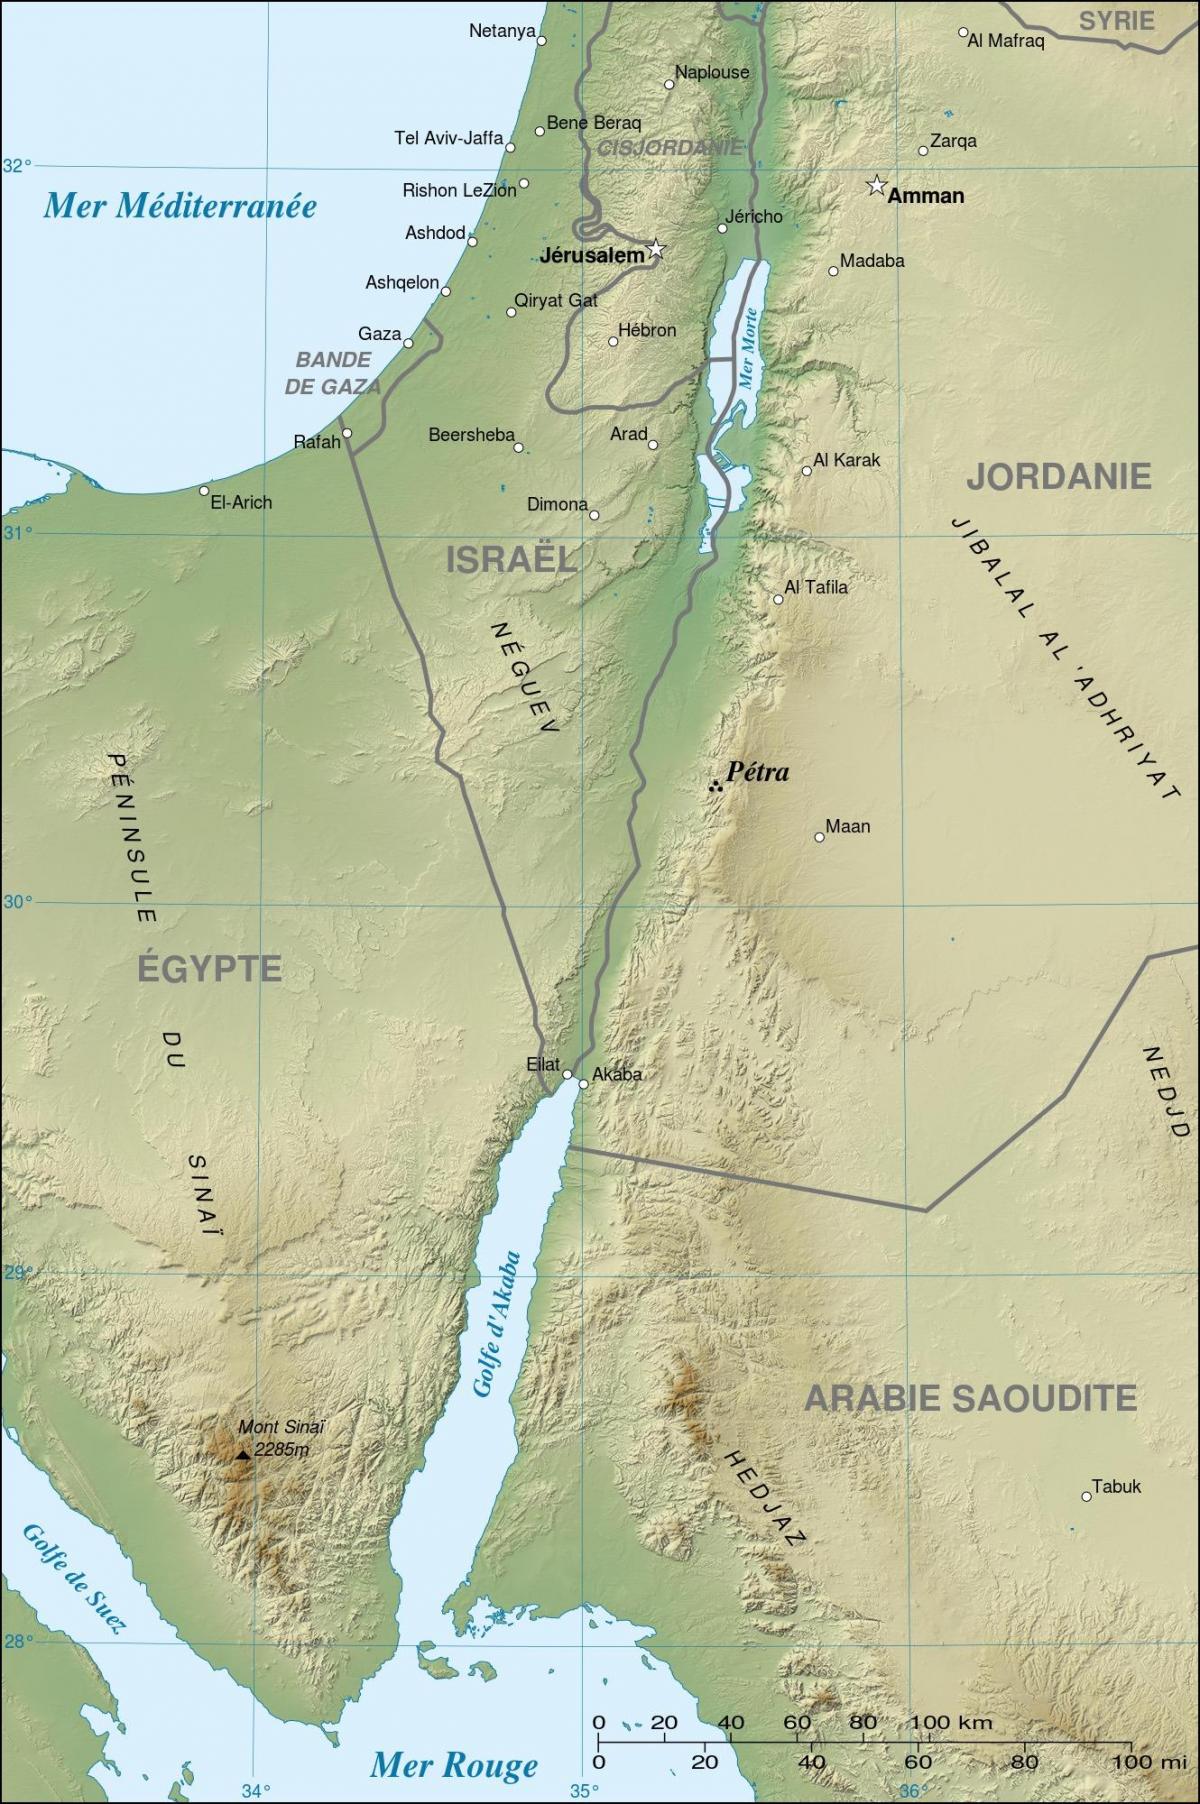 kort over Jordan, der viser, petra